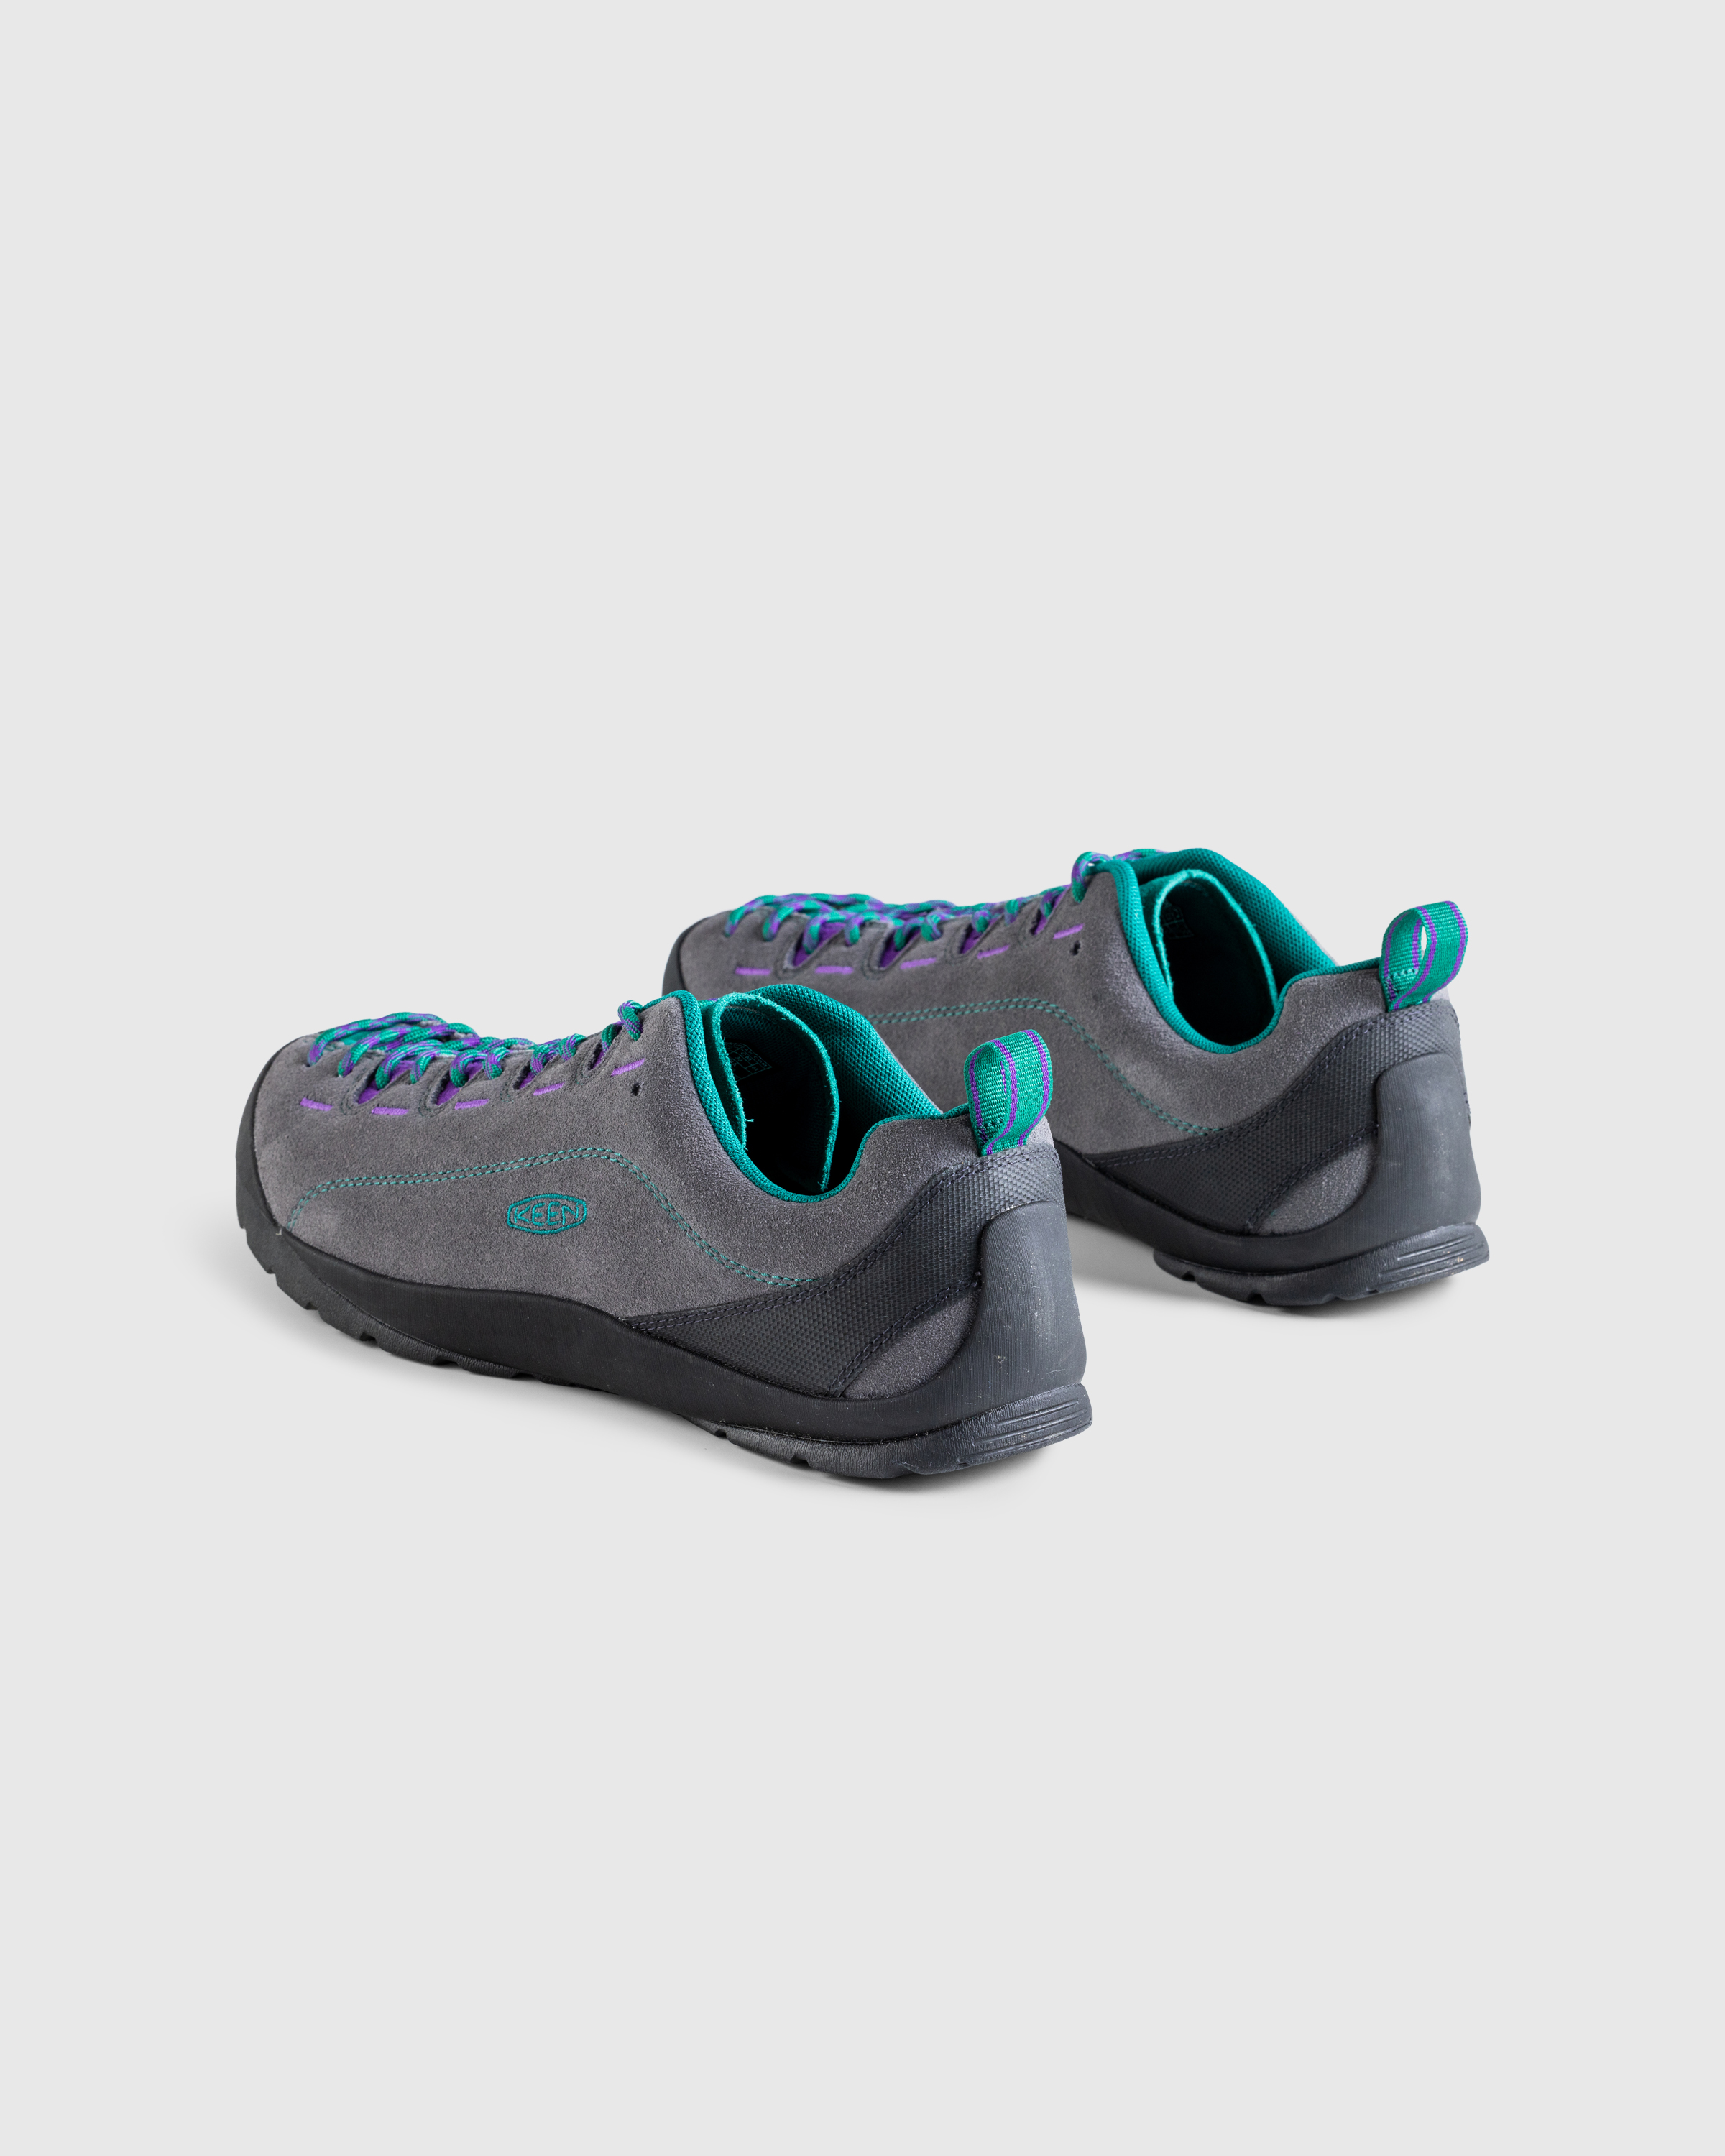 Keen – Jasper M Steel Grey/Aventurine - Low Top Sneakers - Grey - Image 4